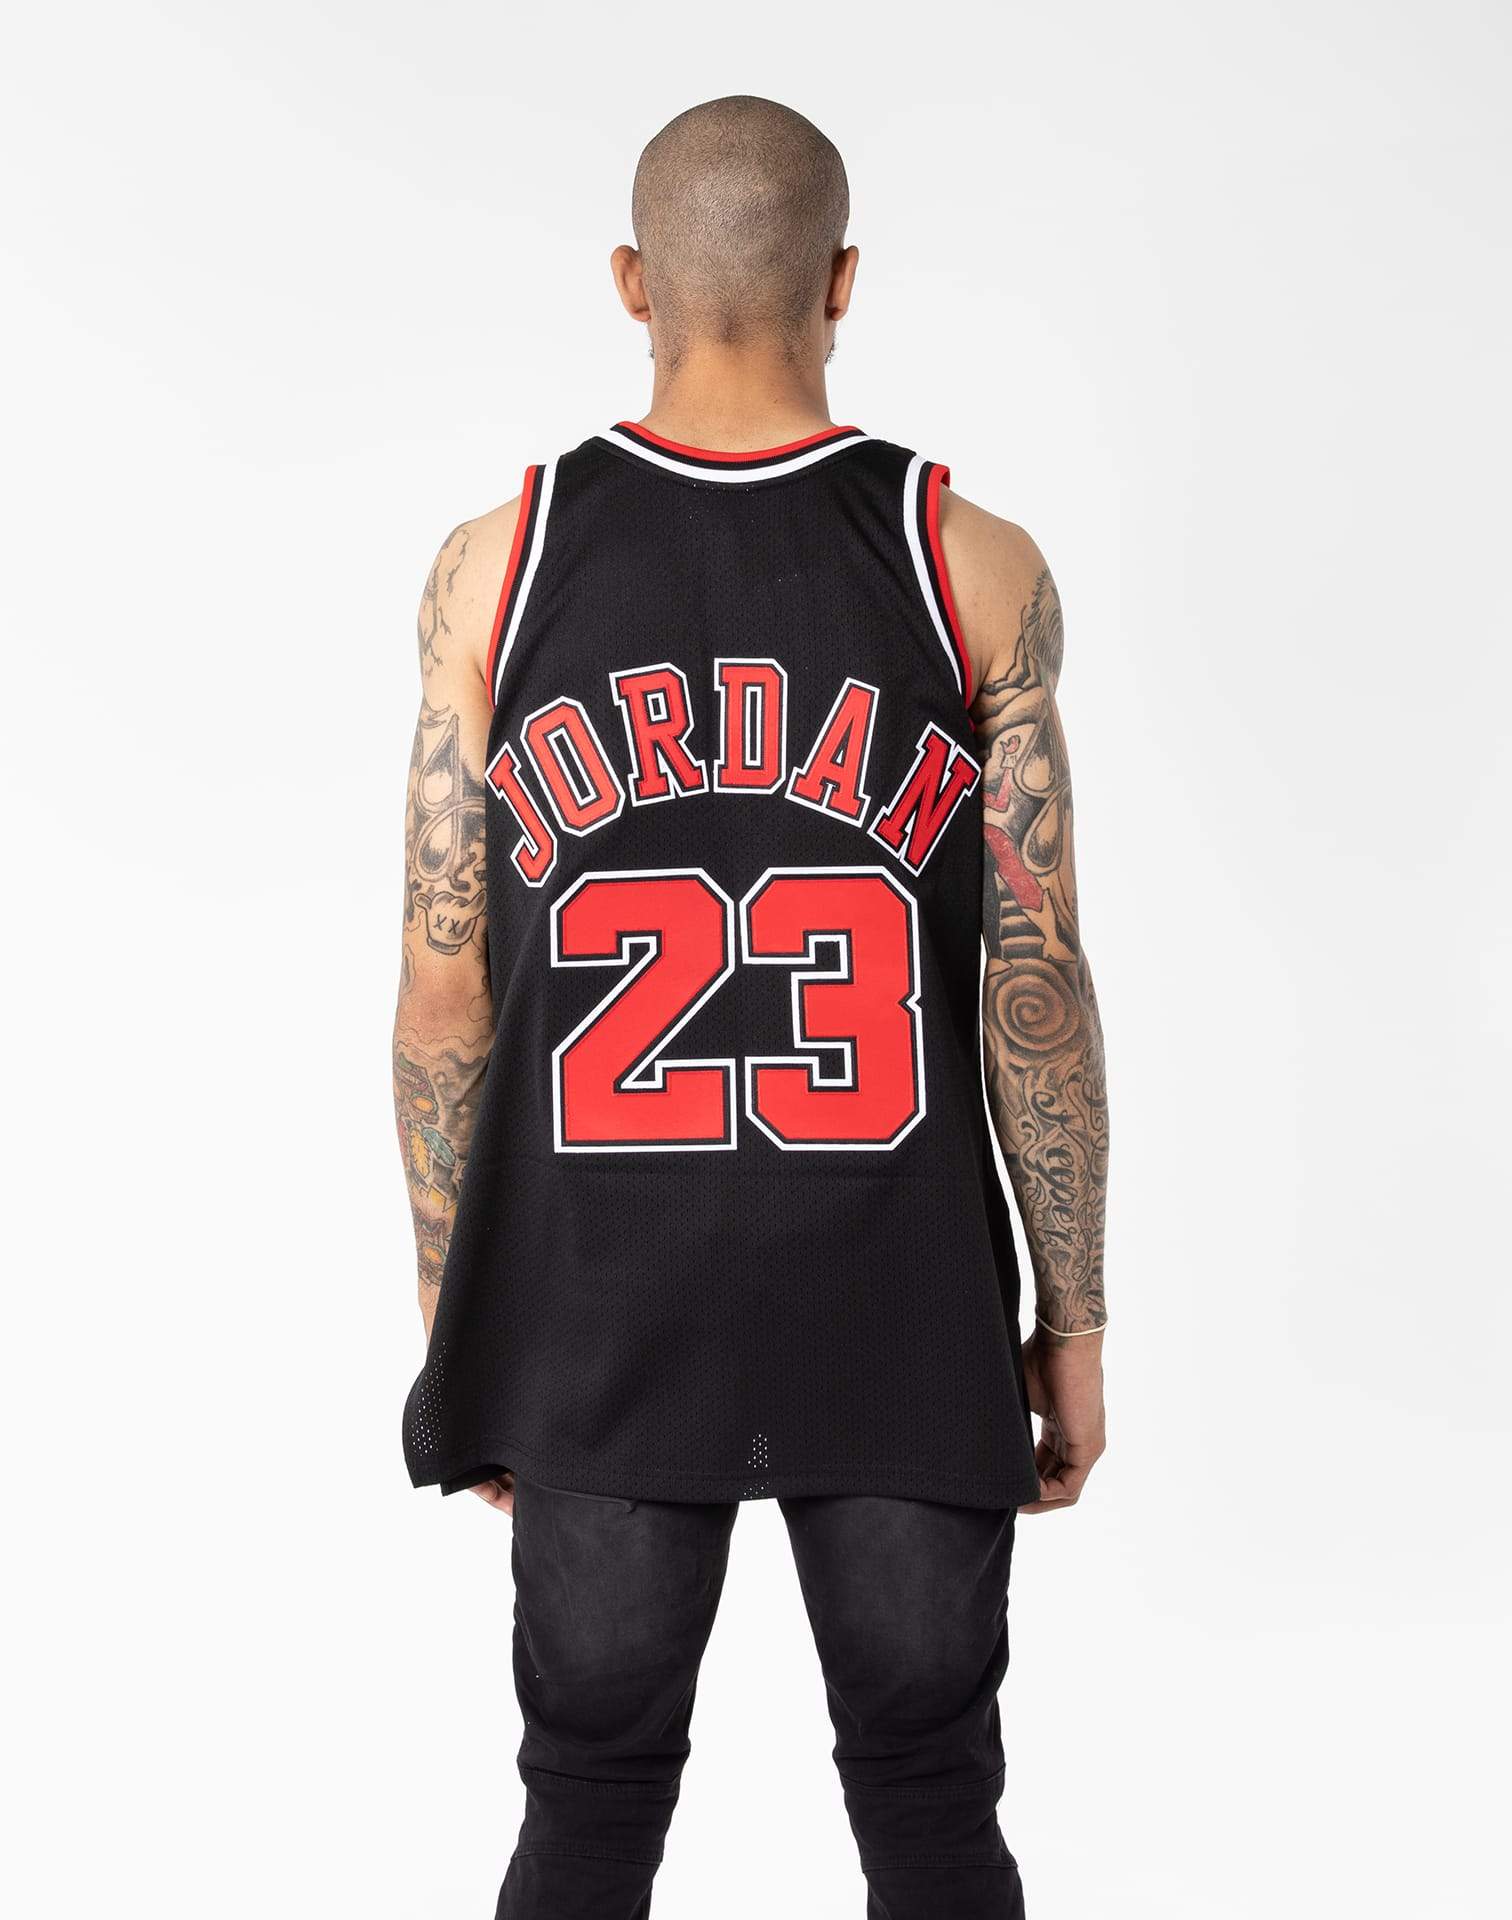 Mitchell & Ness NBA Michael Jordan Authentic Bulls 96 Alternate Jersey S